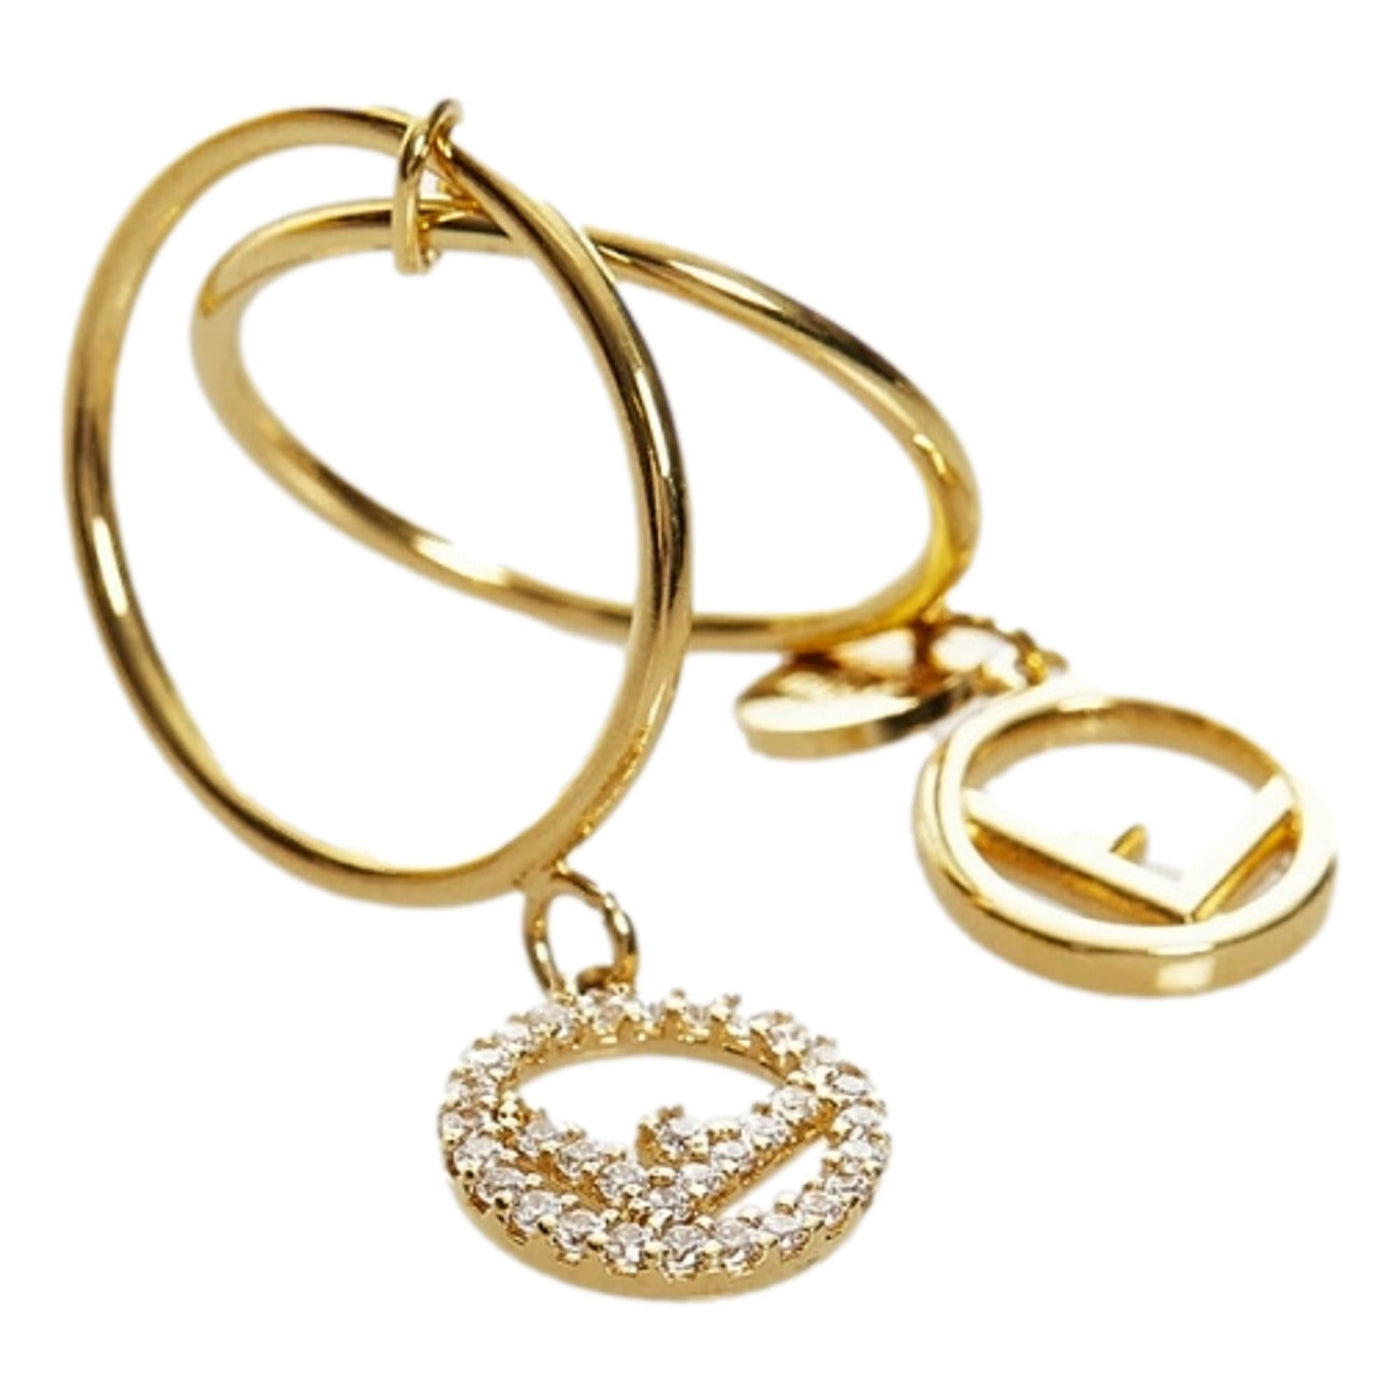 Fendi F is Fendi Soft Gold and Crystal Ring Size 6.5 8AG737 - LUXURYMRKT